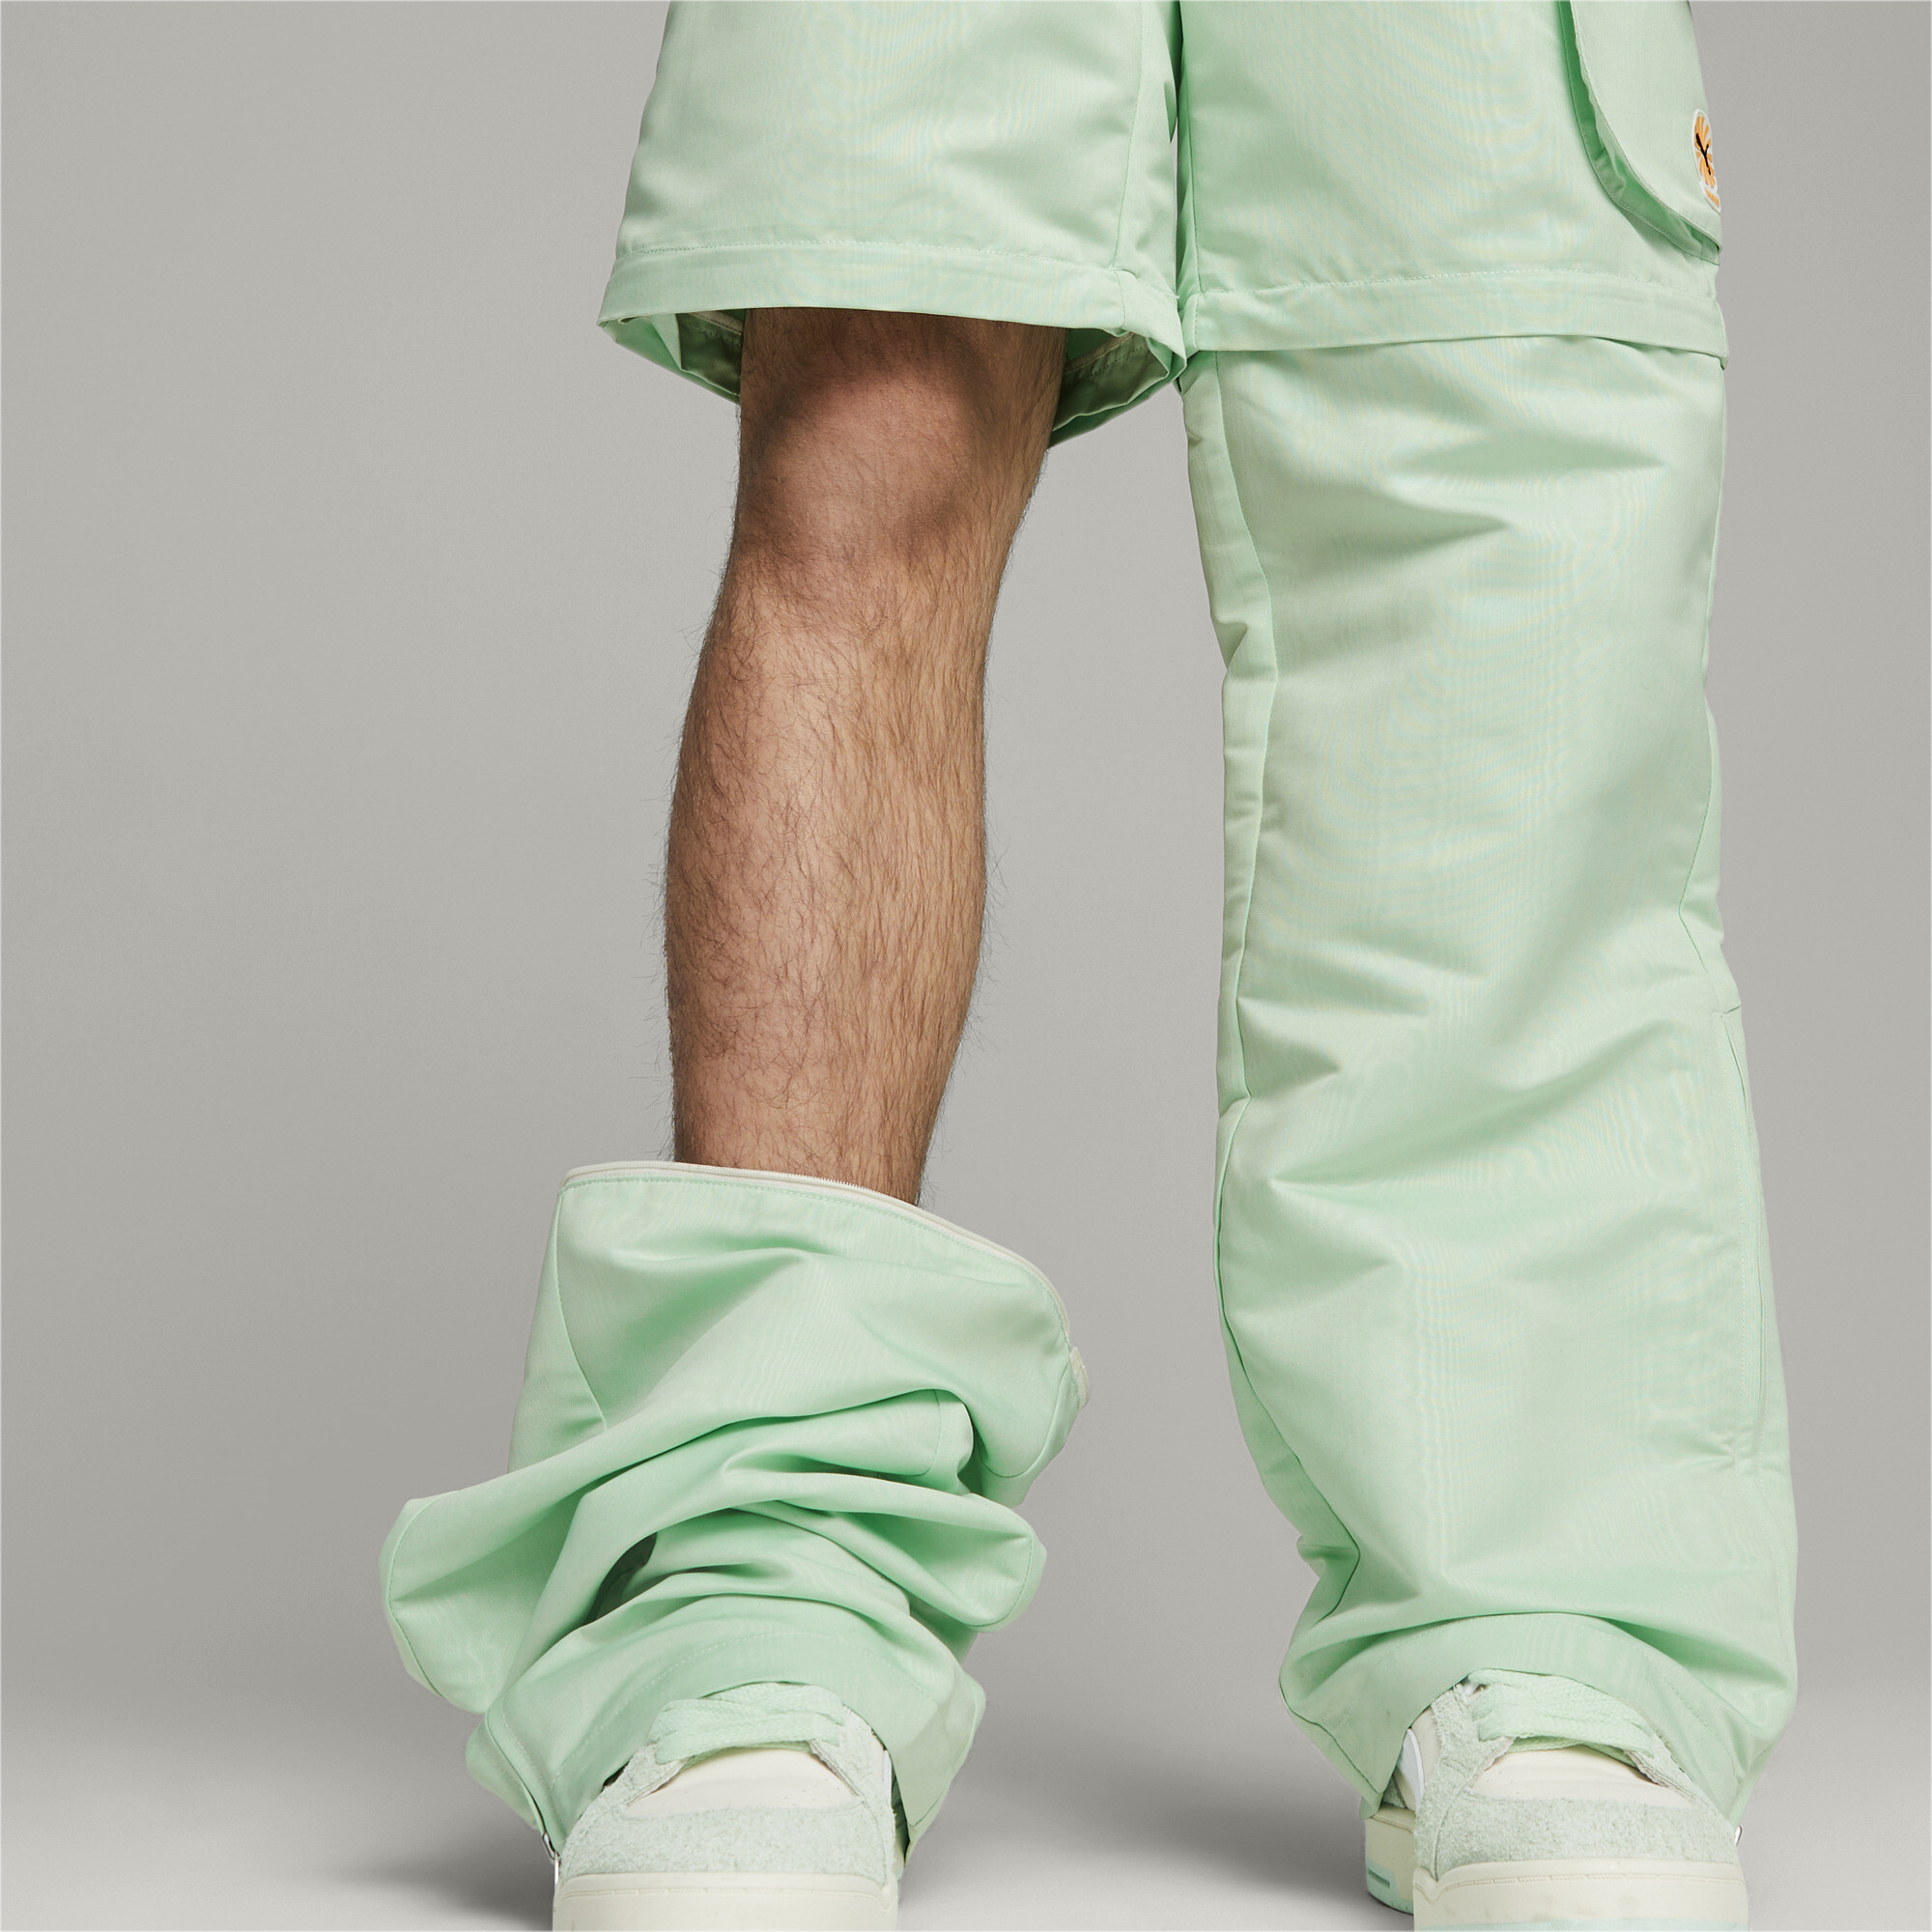 Men's PUMA X PALOMO Pants In 40 - Green, Size Small